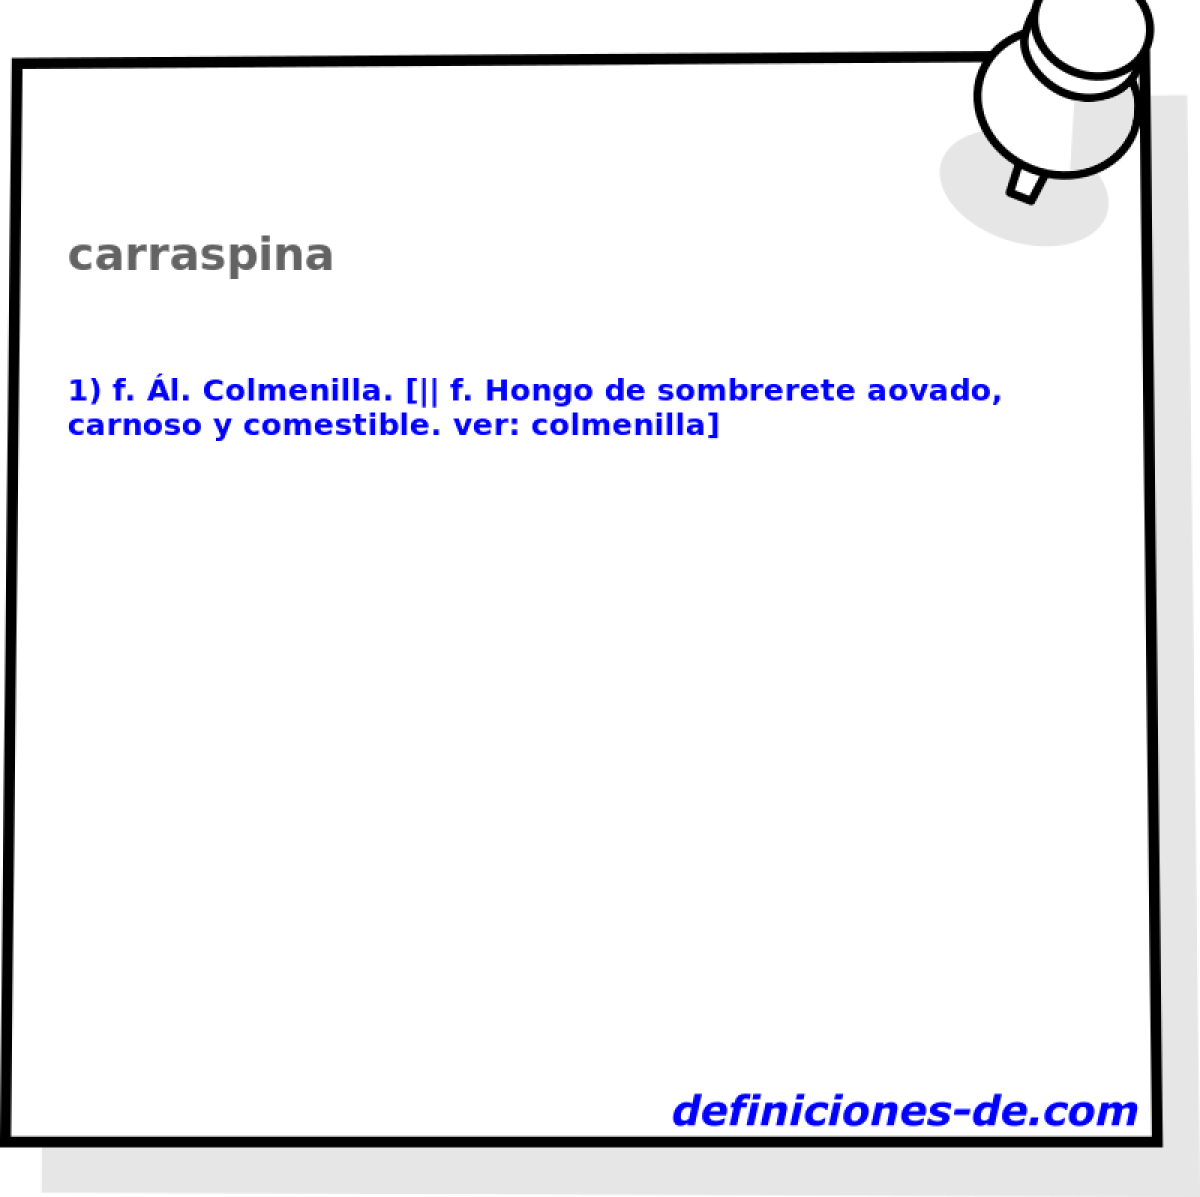 carraspina 